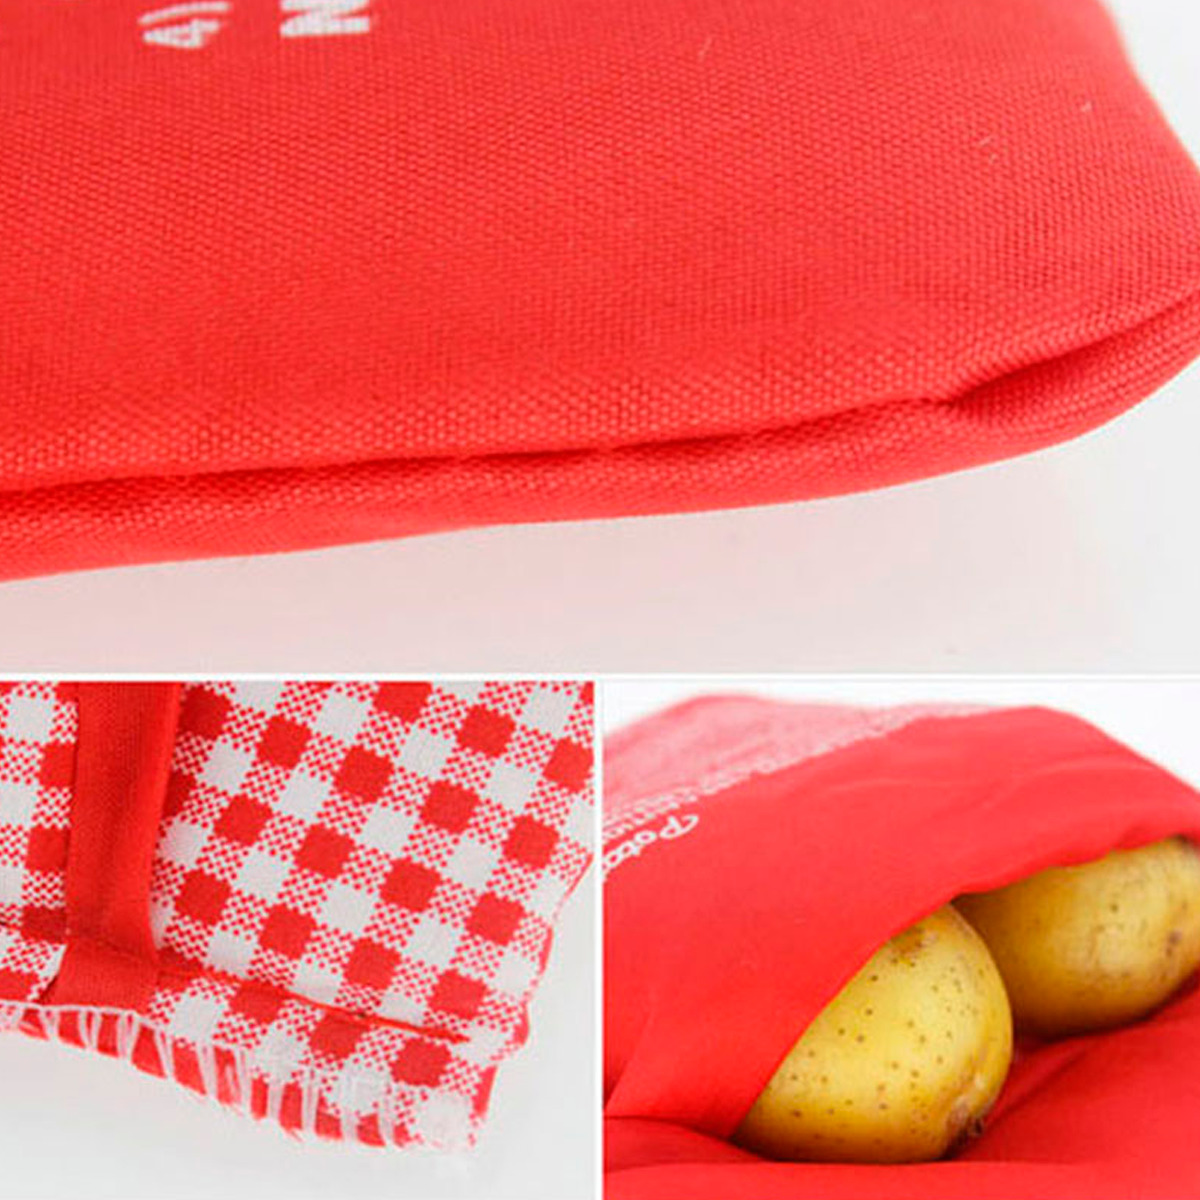 Potato Express 1000188 bolsa para cocinar papas en el microondas, S, Rojo